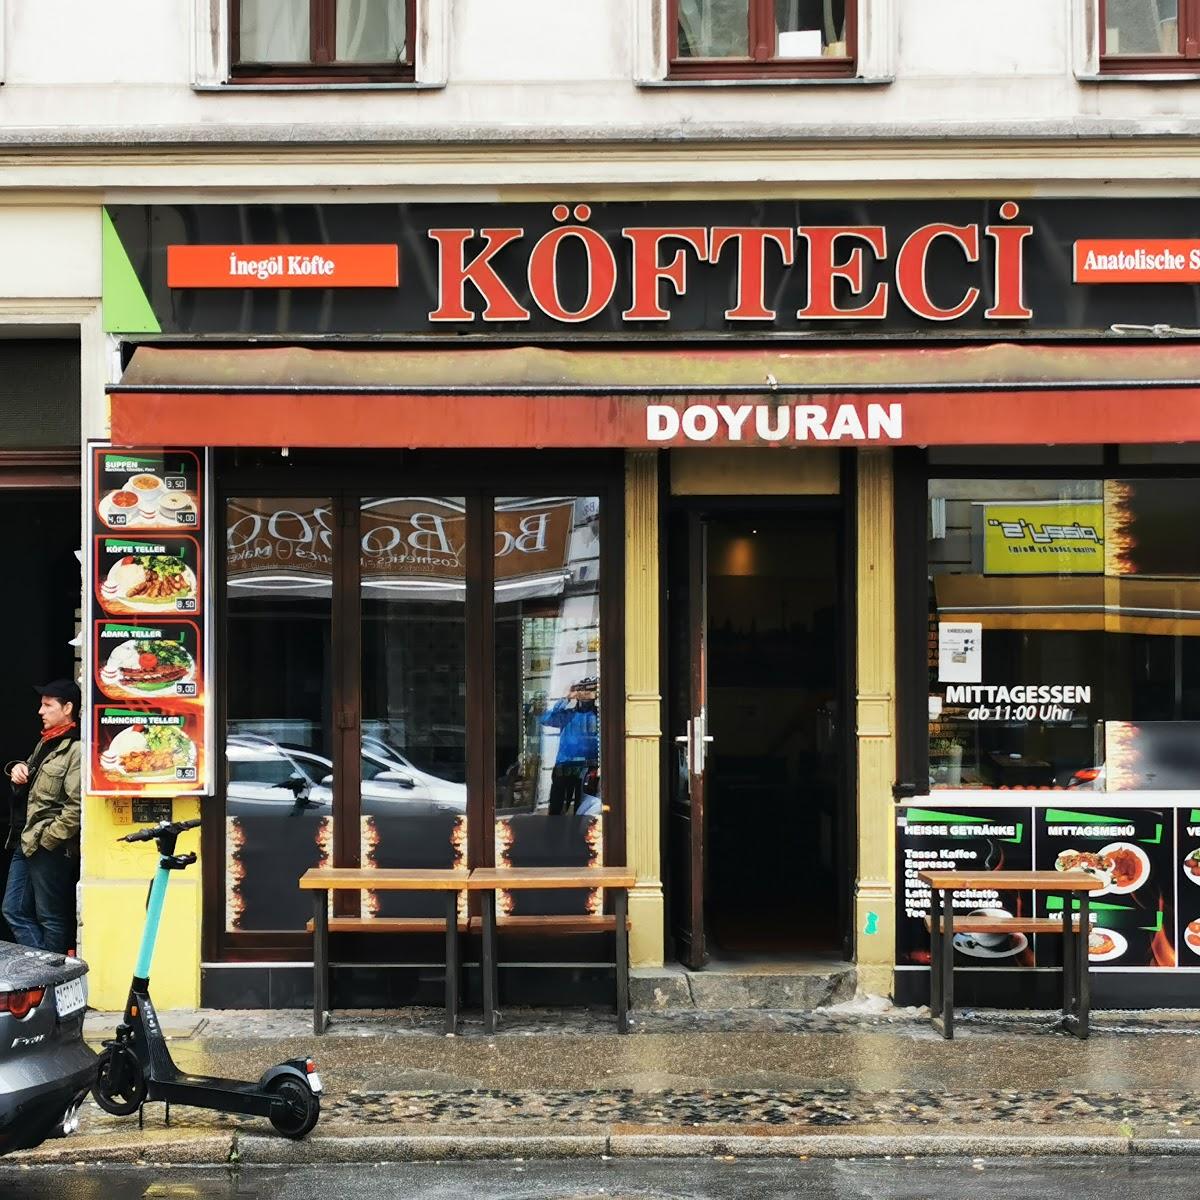 Restaurant "Doyuran Köfteci Berlin" in Berlin